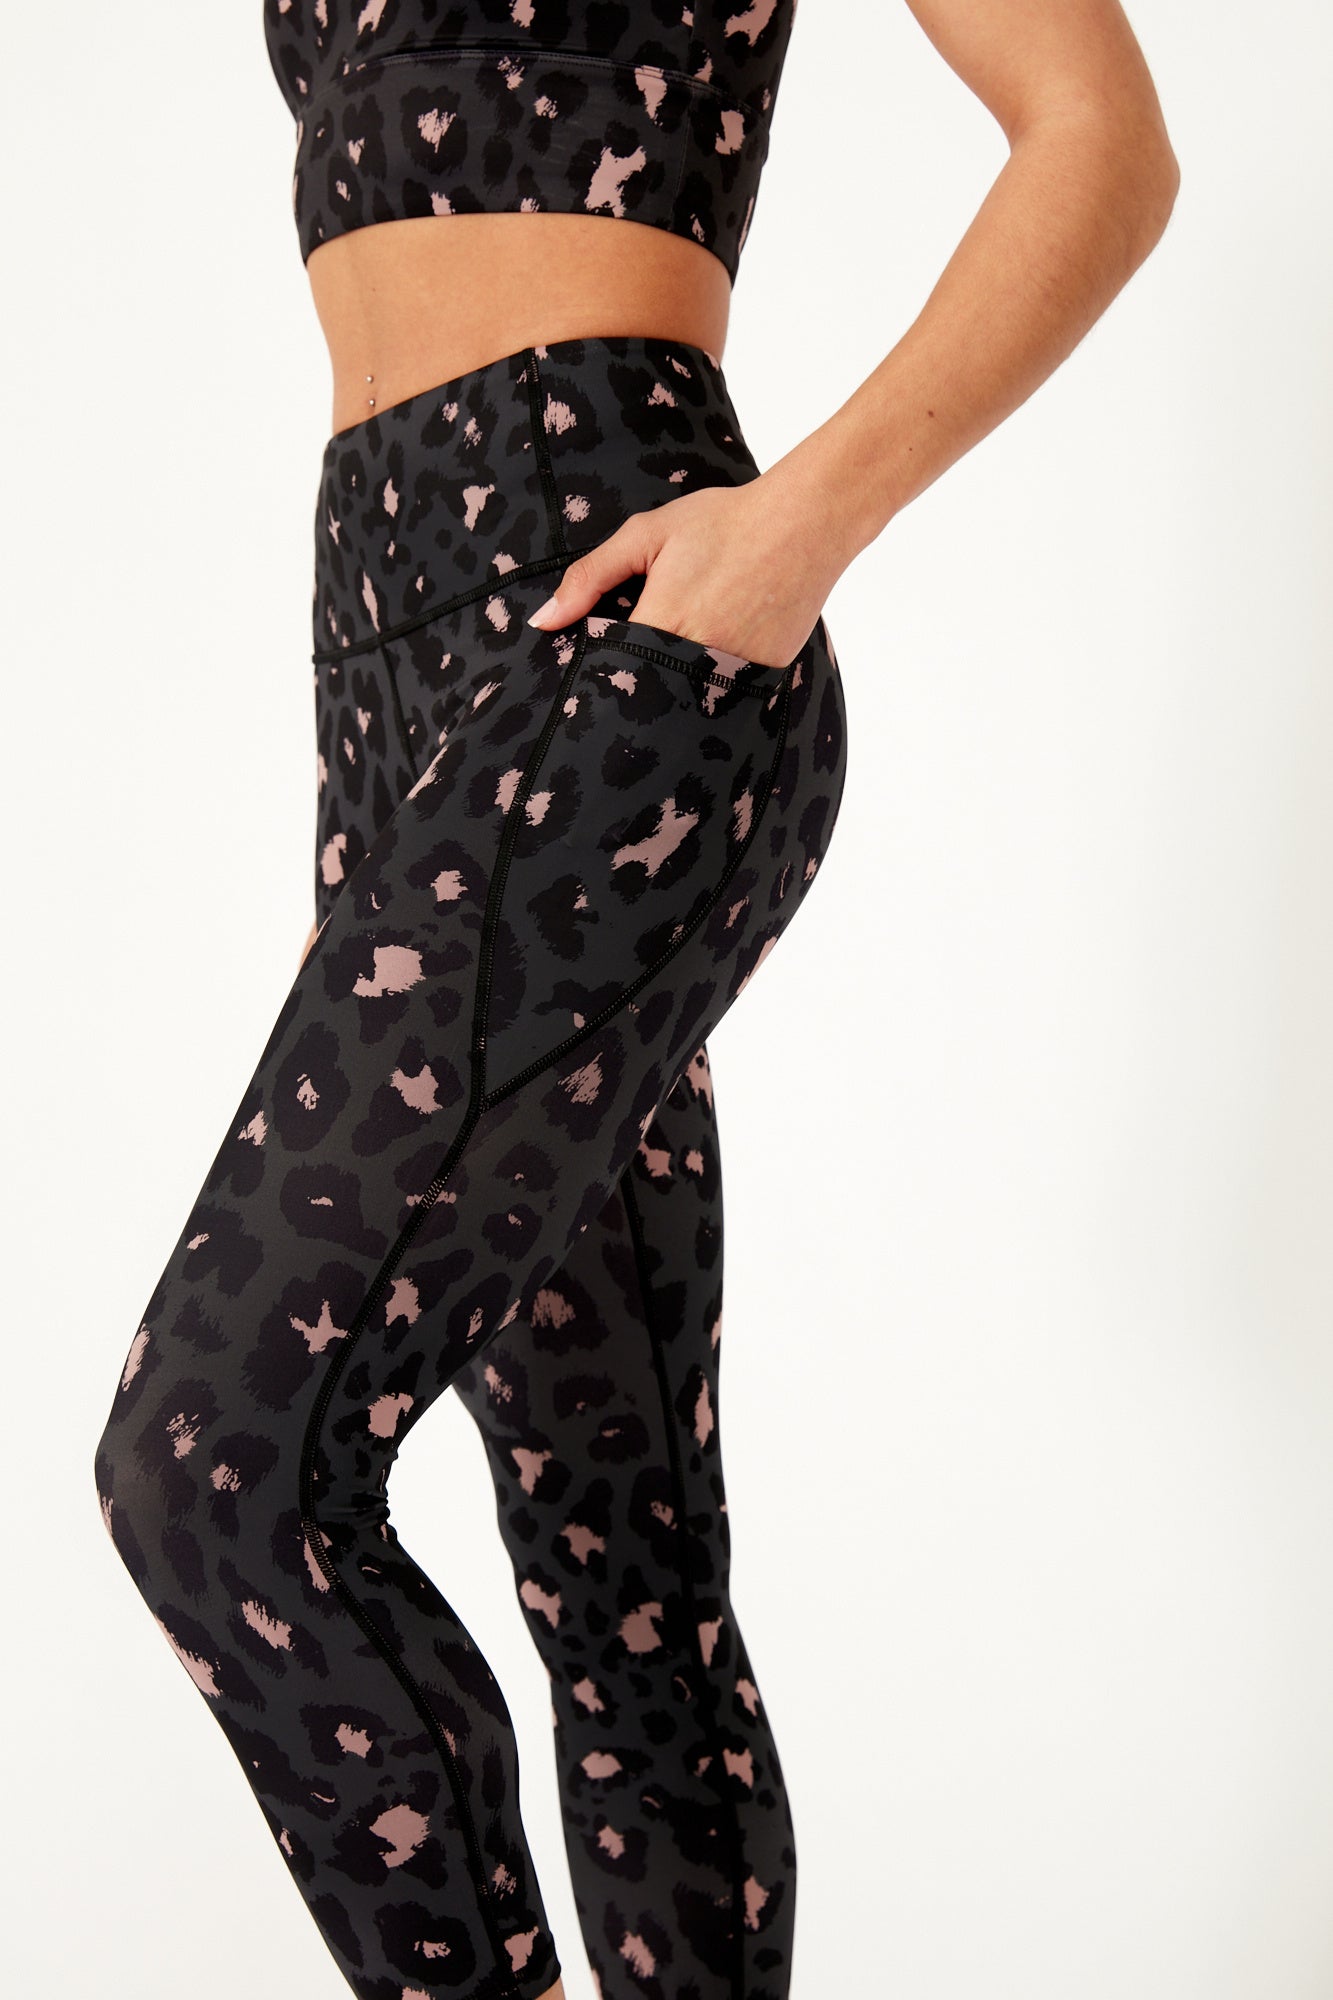 7/8 Length Blush Pink Leopard Print Leggings with Hidden Waistband